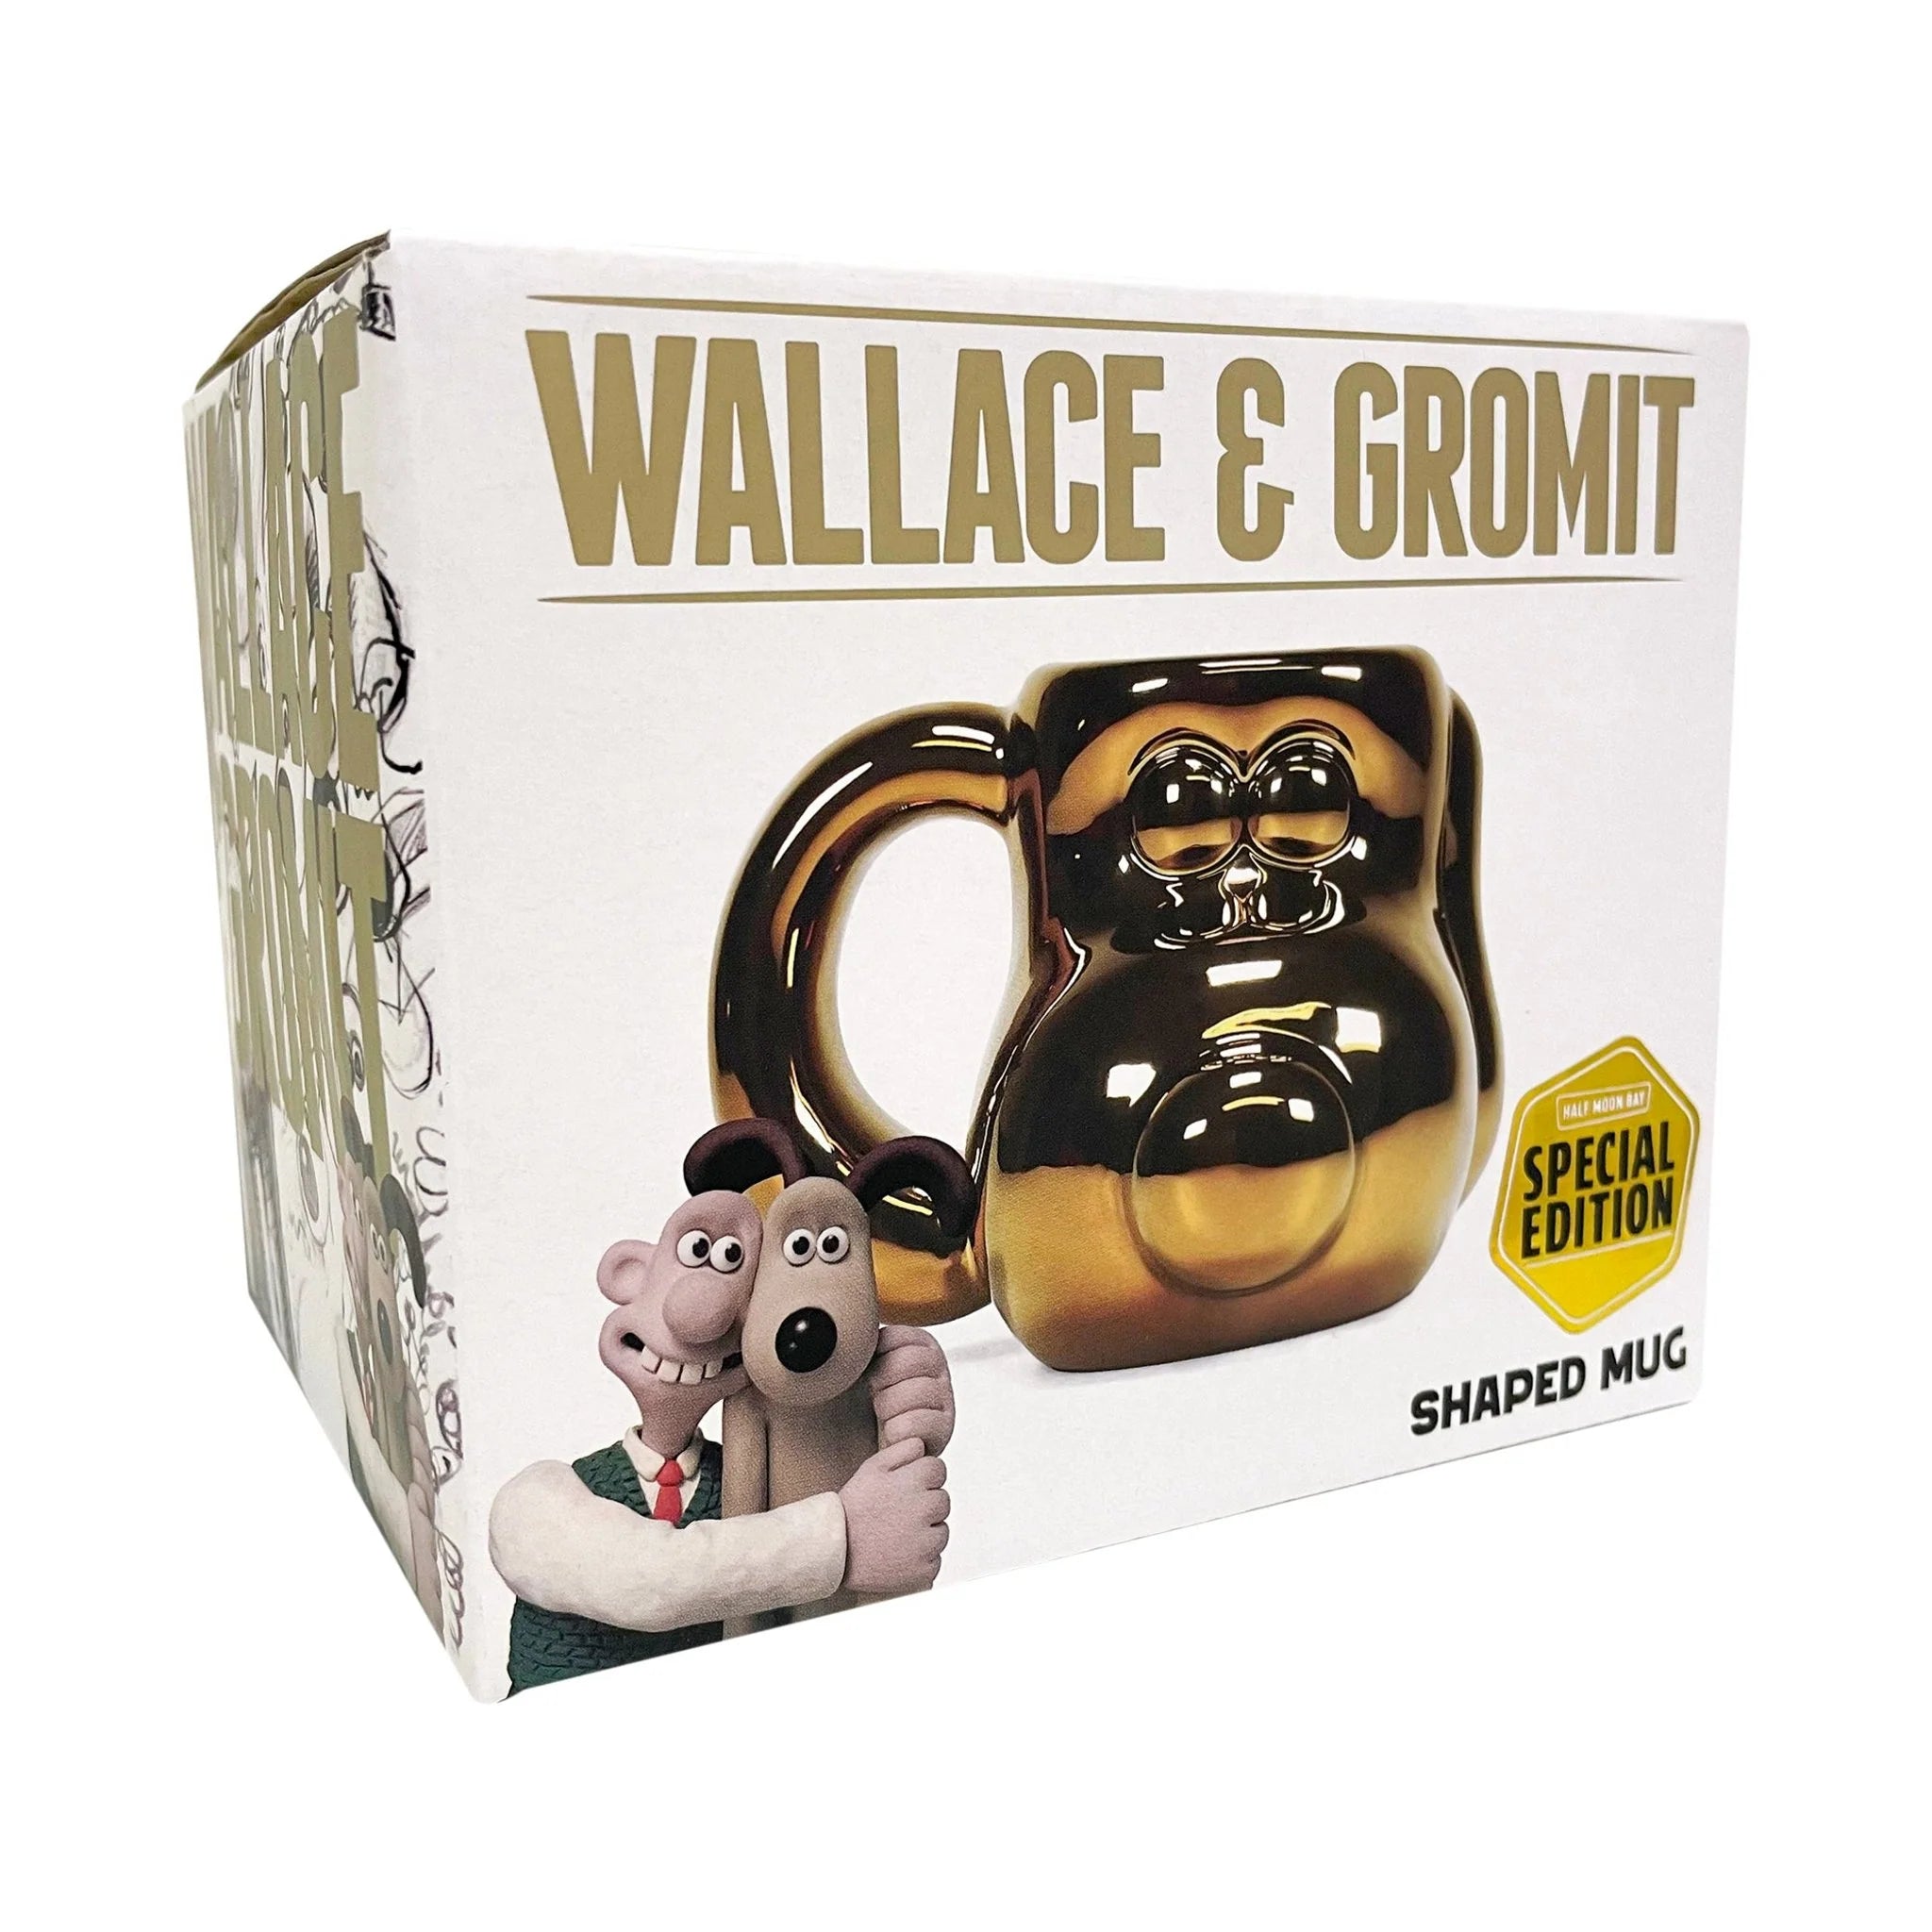 Golden Gromit Mug From Aardman Wallace Gromit Half Moon Bay Officially Licensed Range